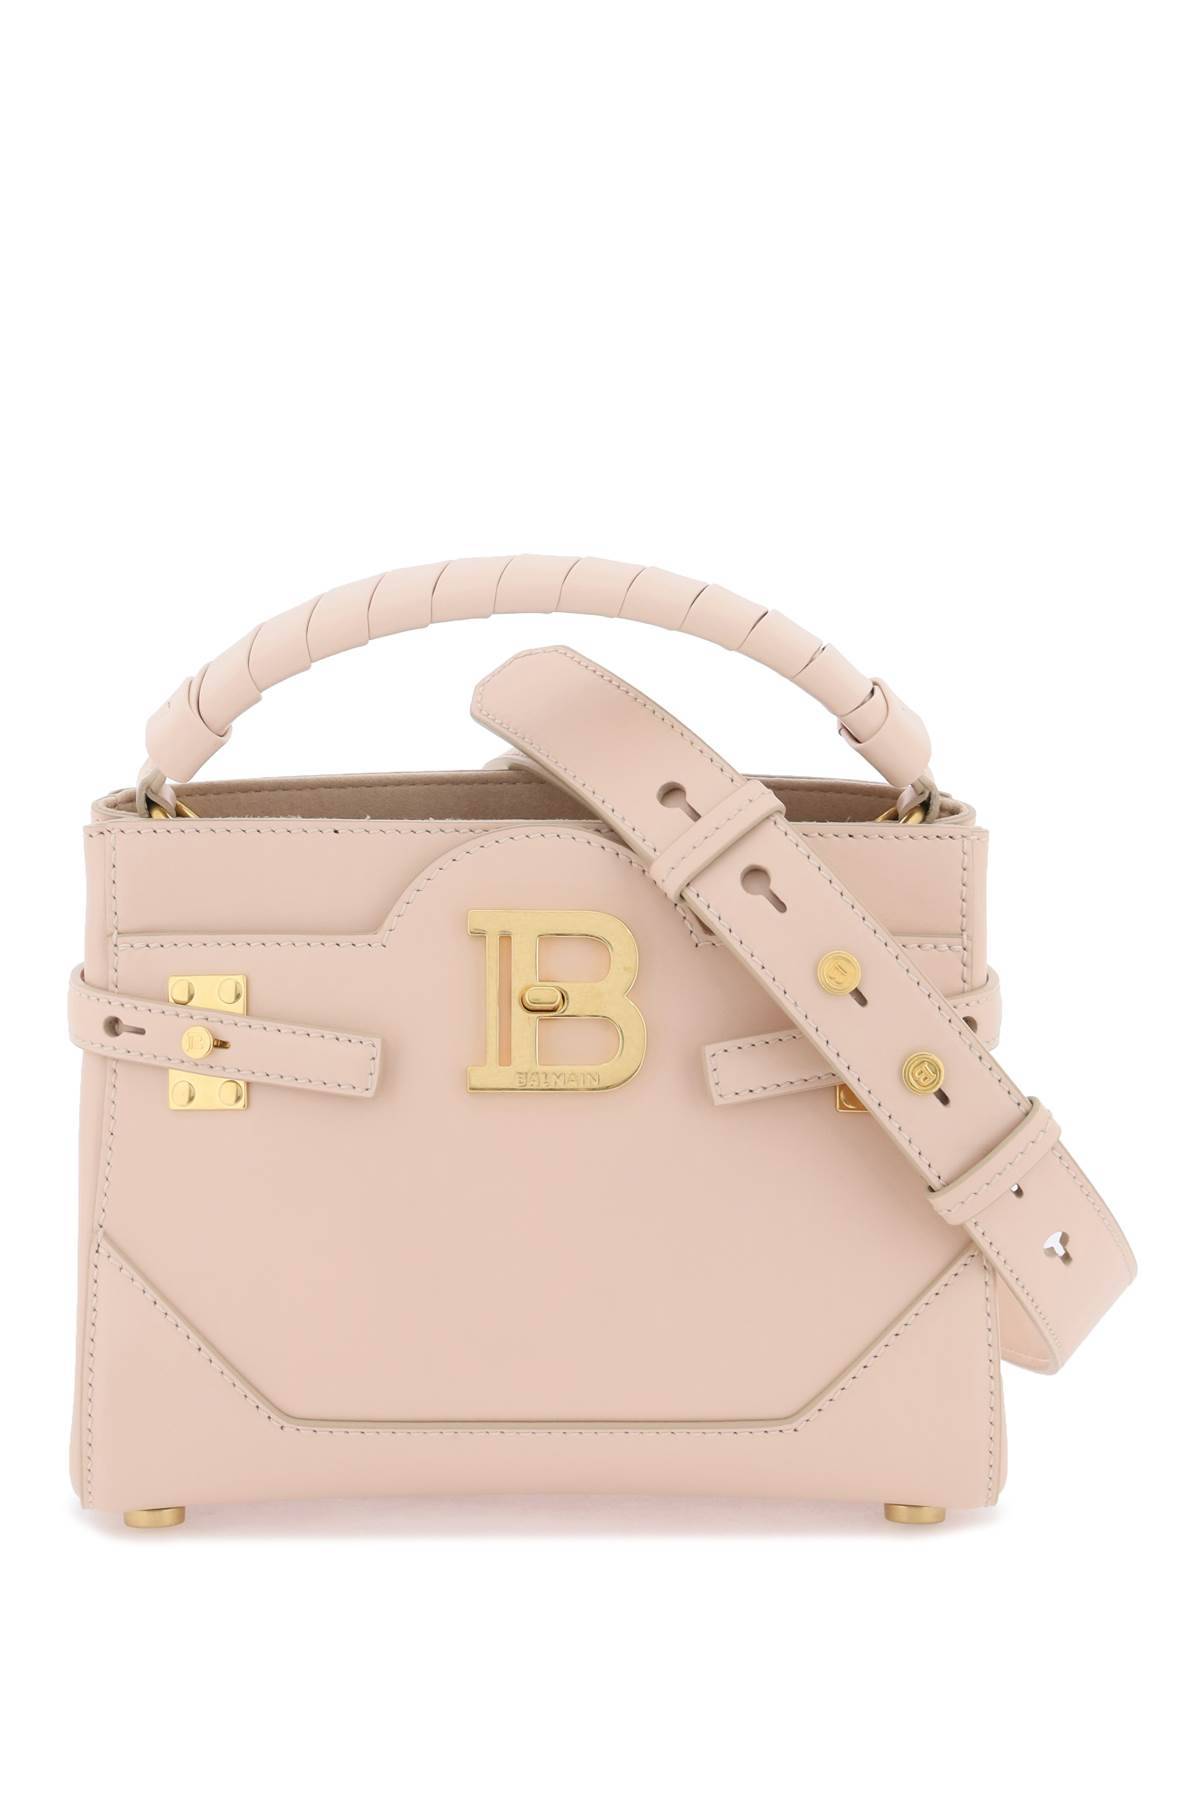 Balmain BALMAIN b-buzz 22 top handle handbag